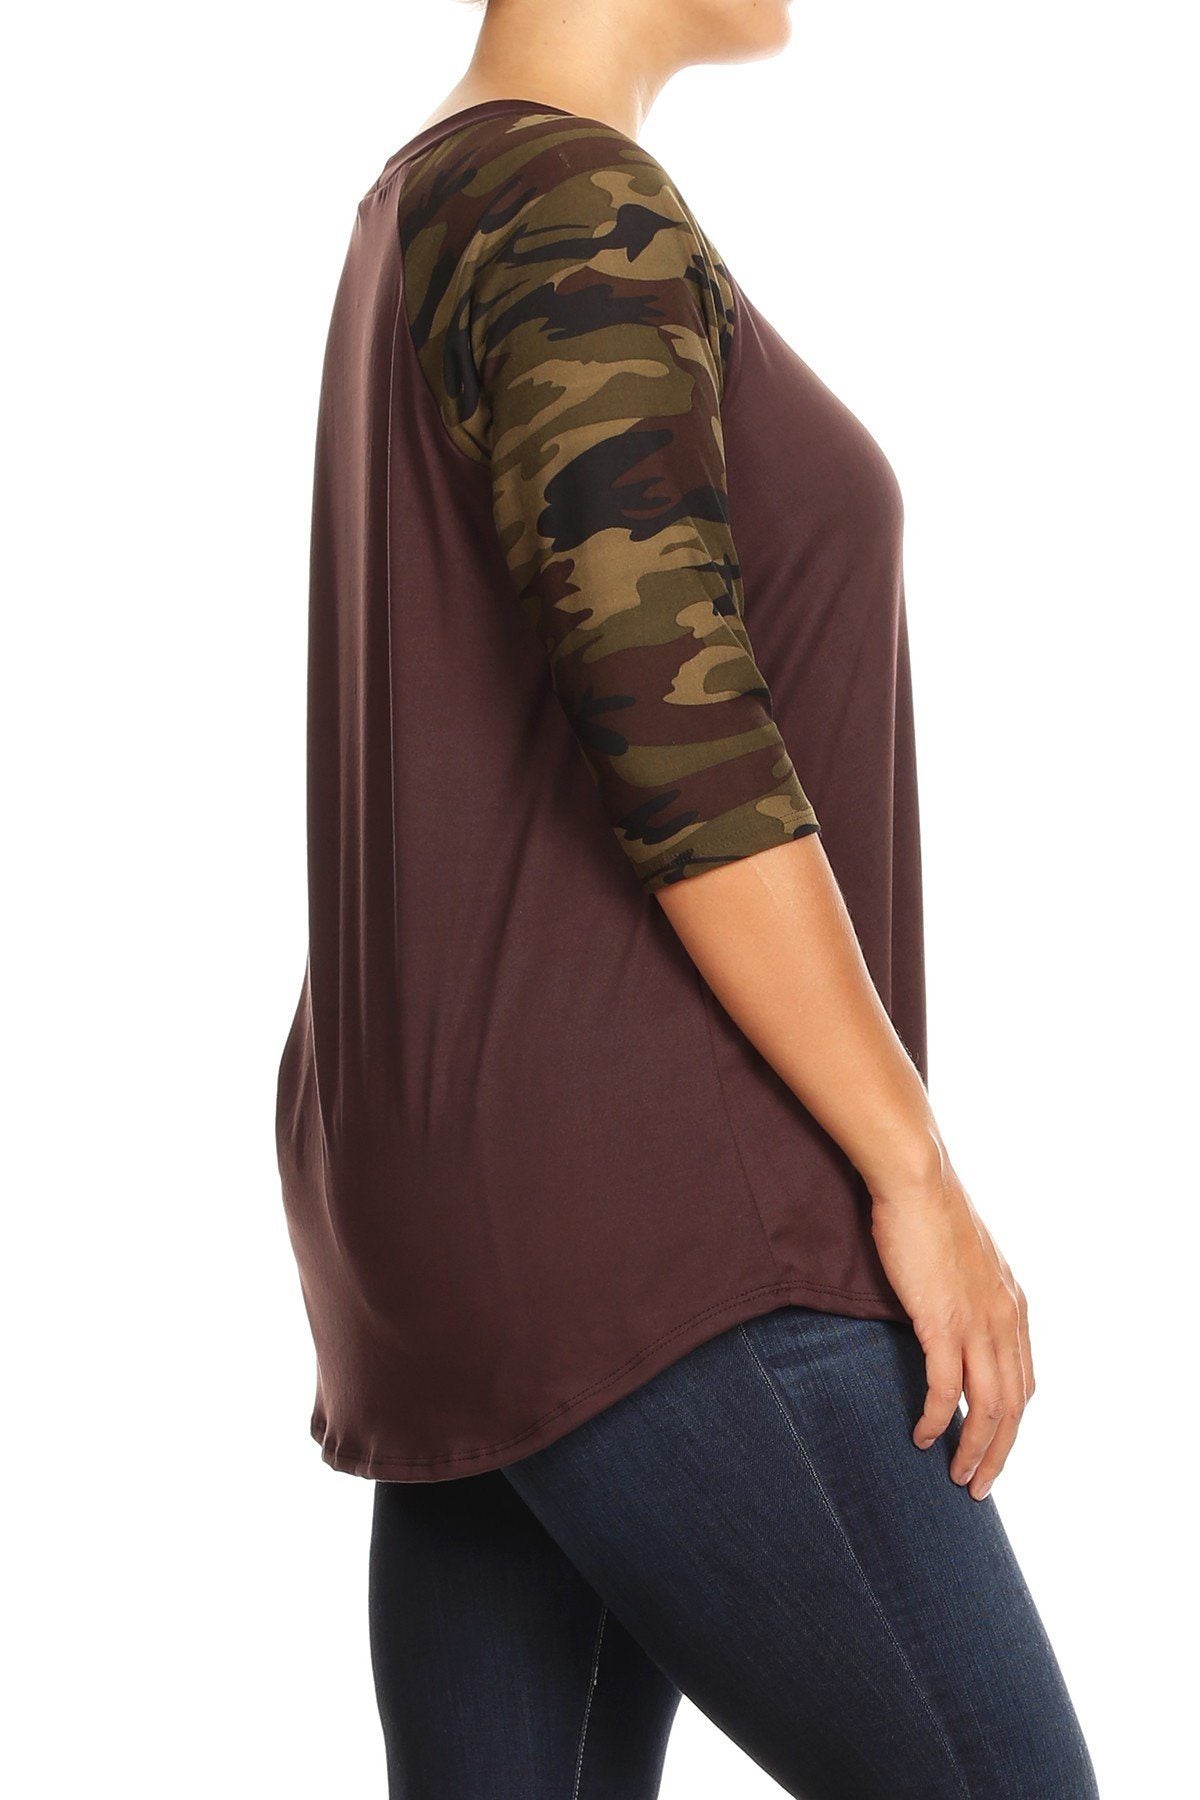 Women's Camo Brown Tunic Raglan Top: Plus 1xl/2xl/3xl Tops MomMe and More 